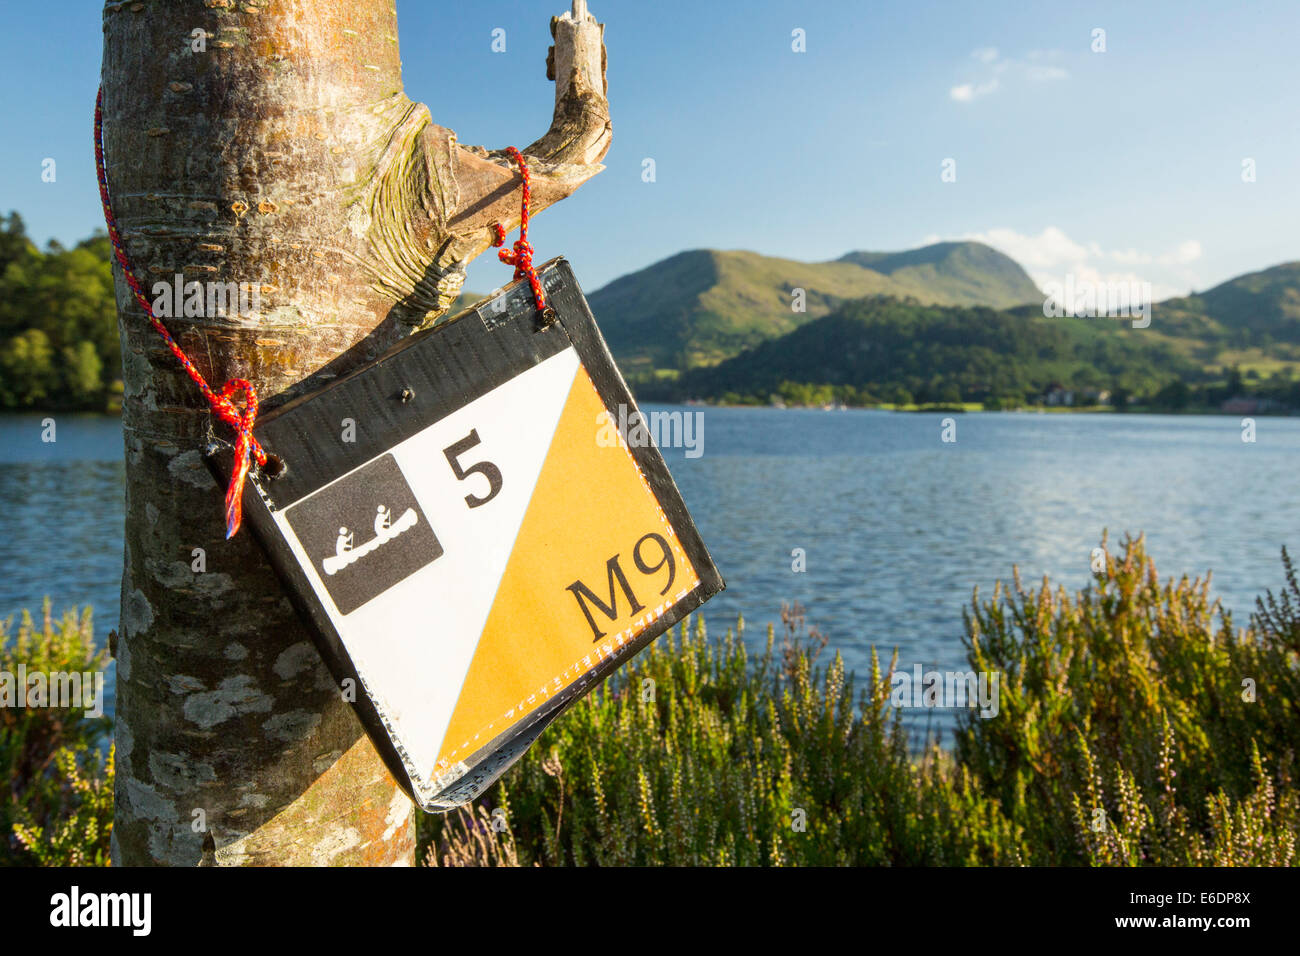 A kayak orienteering sign on Ullswater in the Lake District, UK. Stock Photo